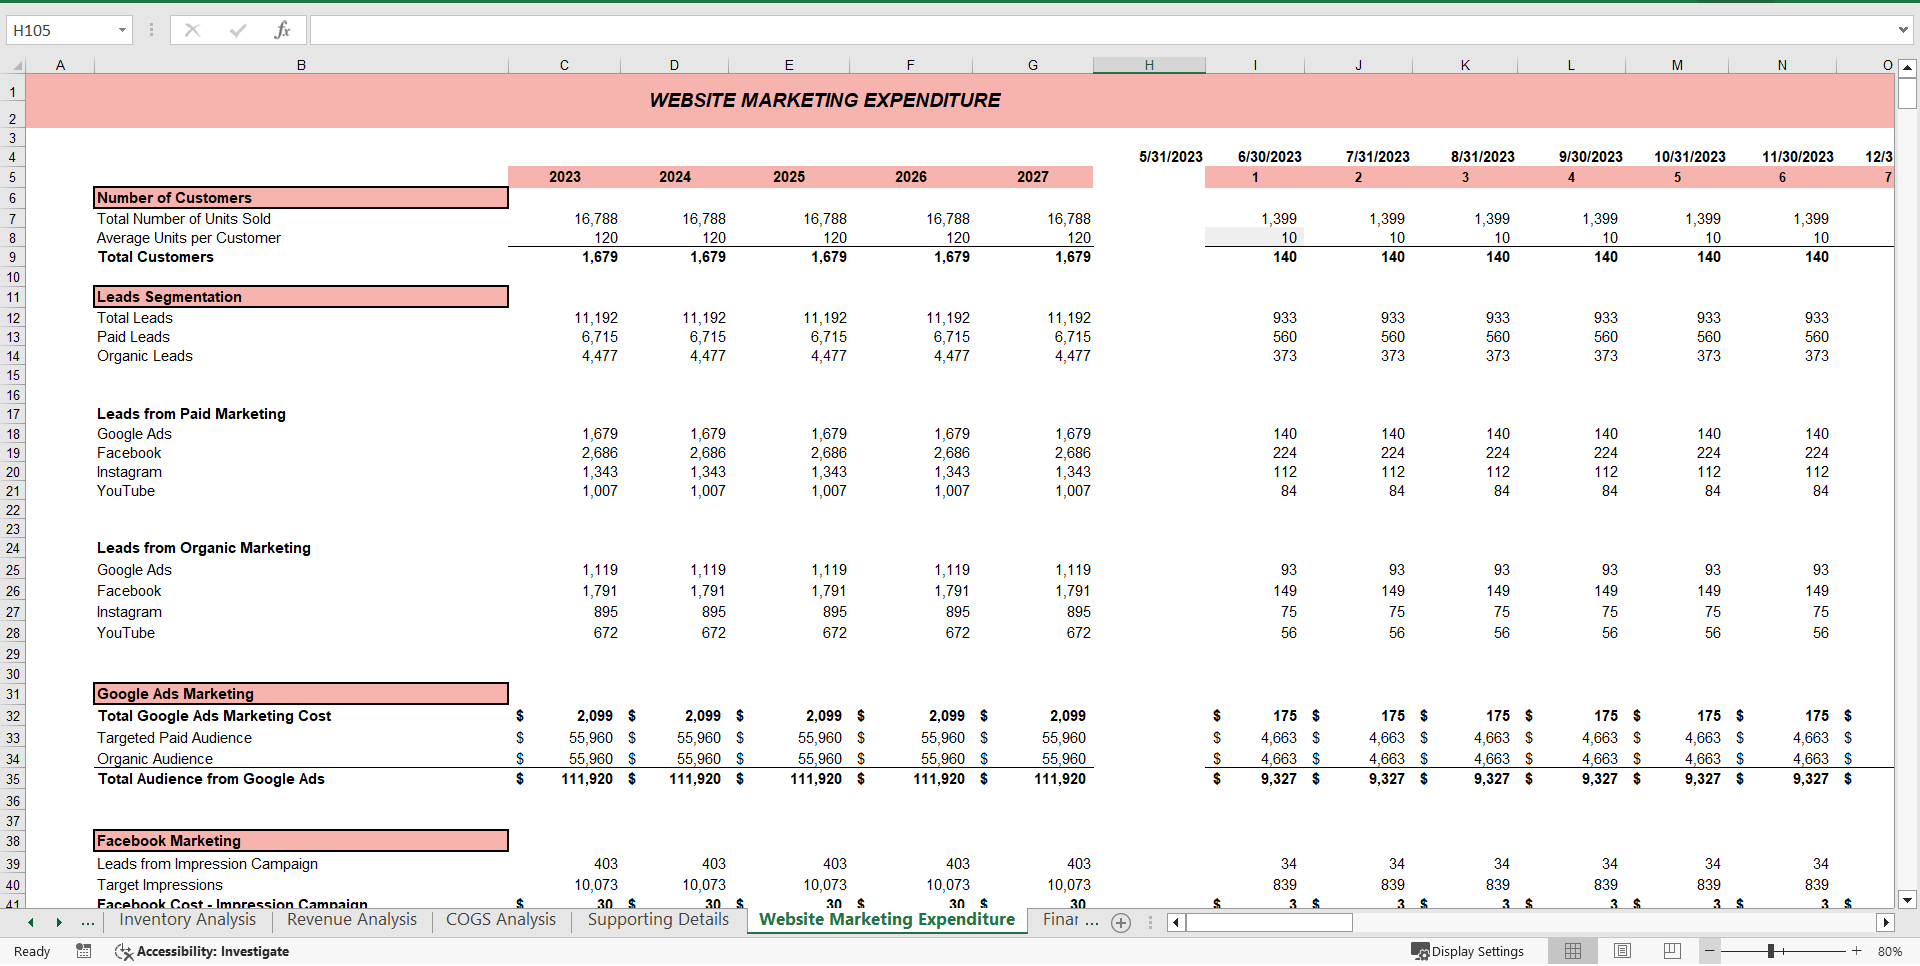 Online Pet Store Excel Financial Model Template (Excel template (XLSX)) Preview Image